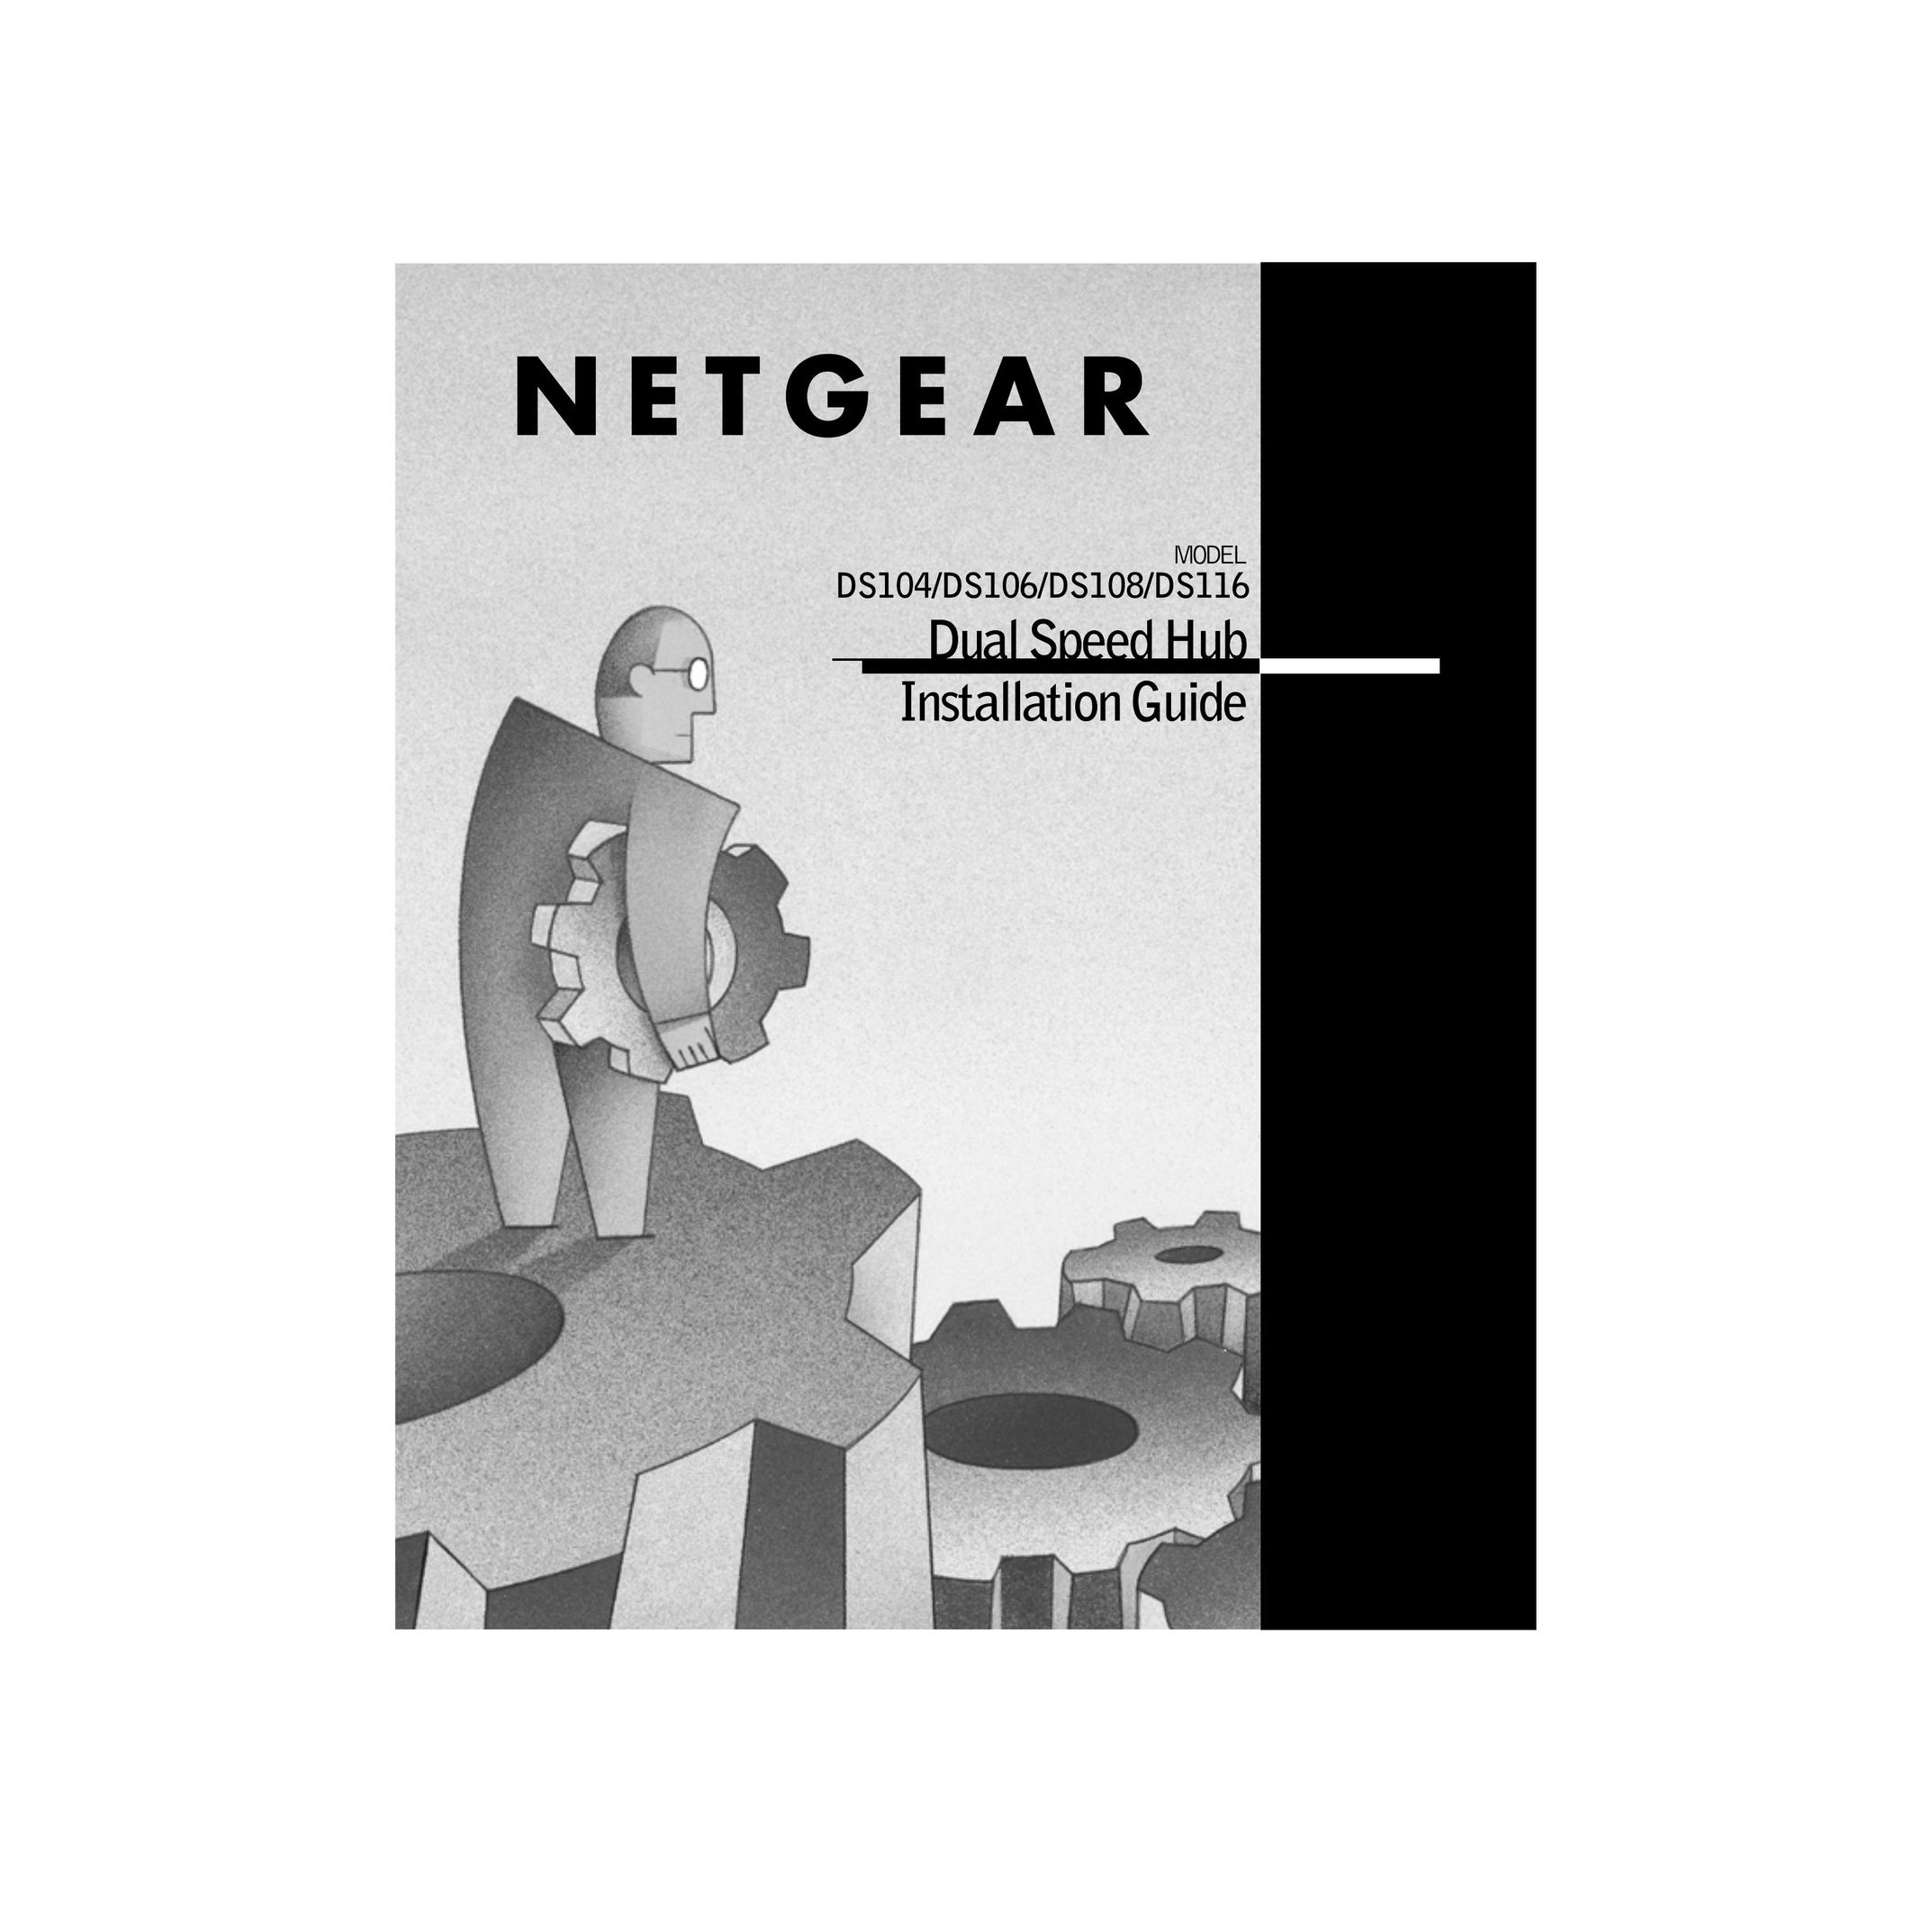 NETGEAR DS104 Switch User Manual